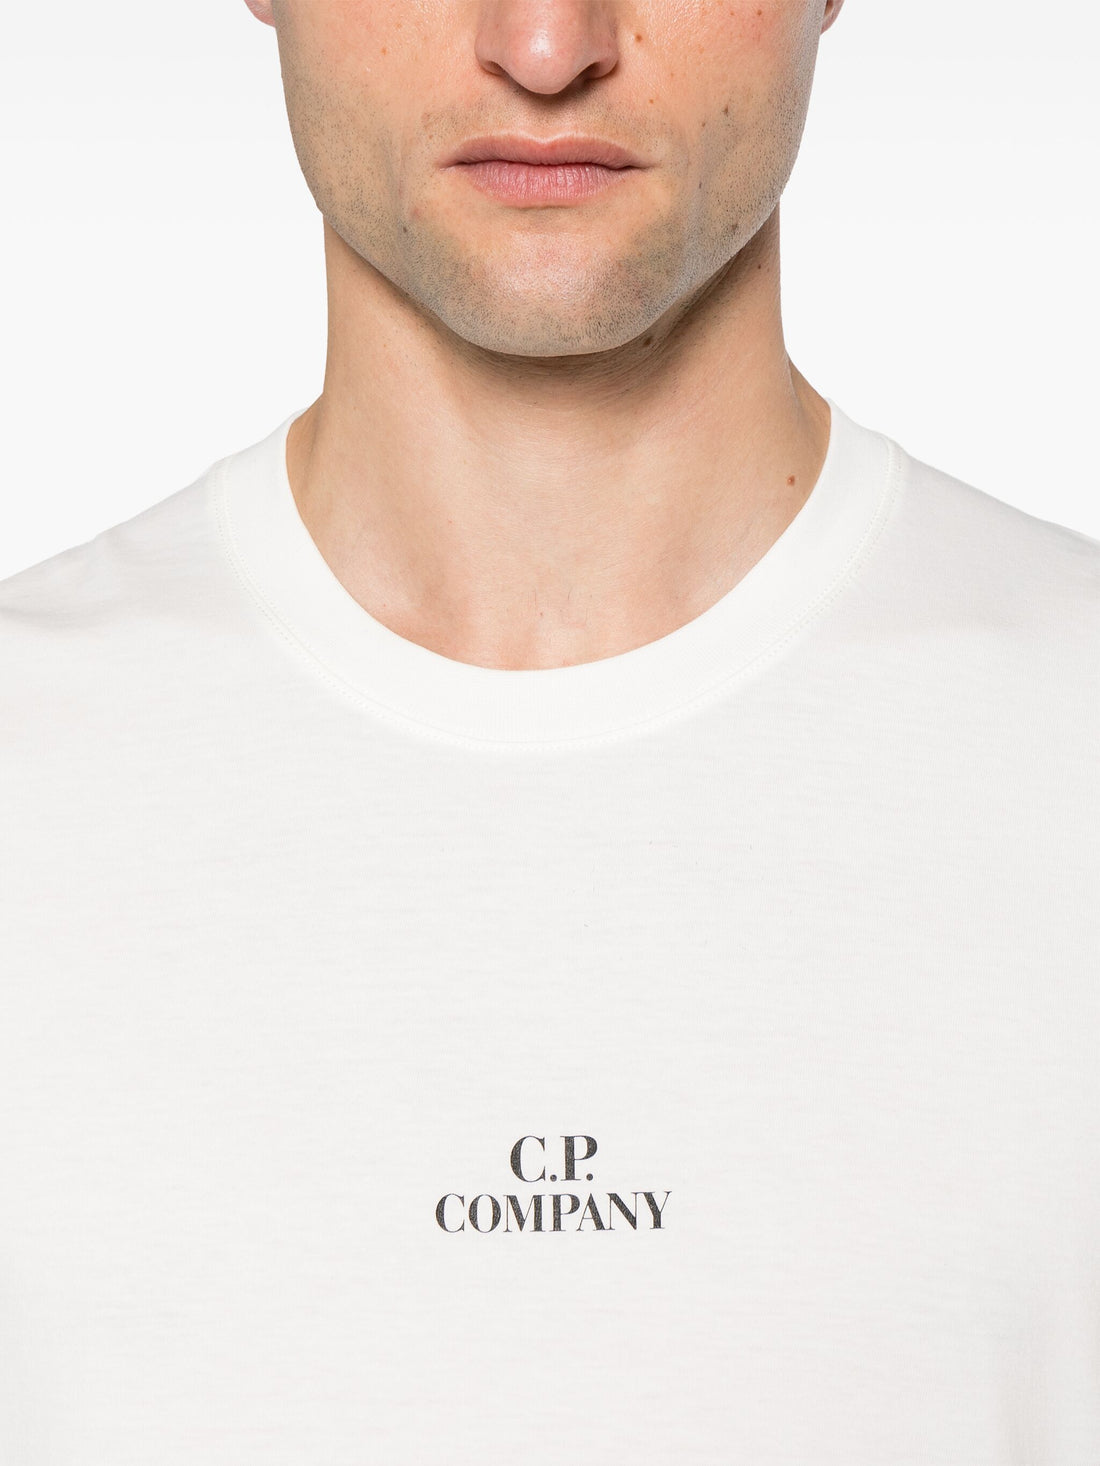 C.P. COMPANY Logo Graphic Print Cotton T-Shirt White - MAISONDEFASHION.COM